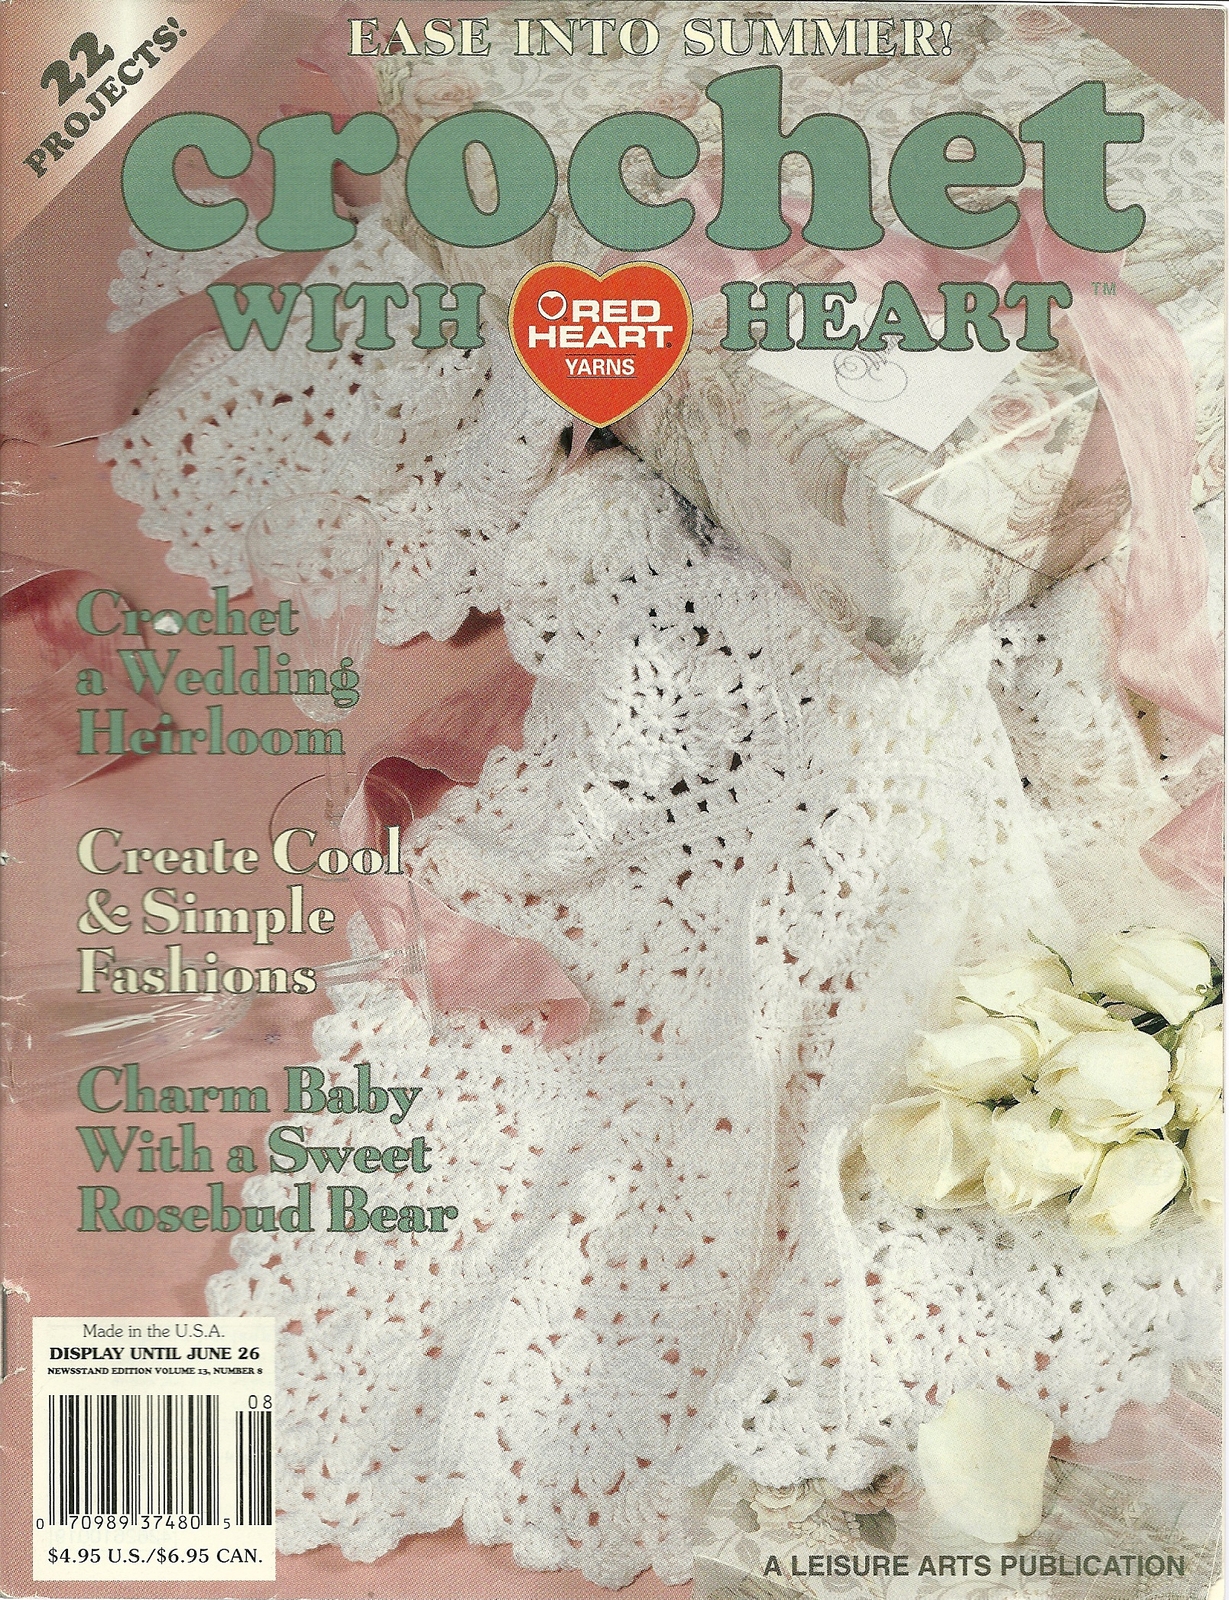 Crochet With Heart Leisure Arts Magazine June 2001 Volume 6 No. 2 - $6.99